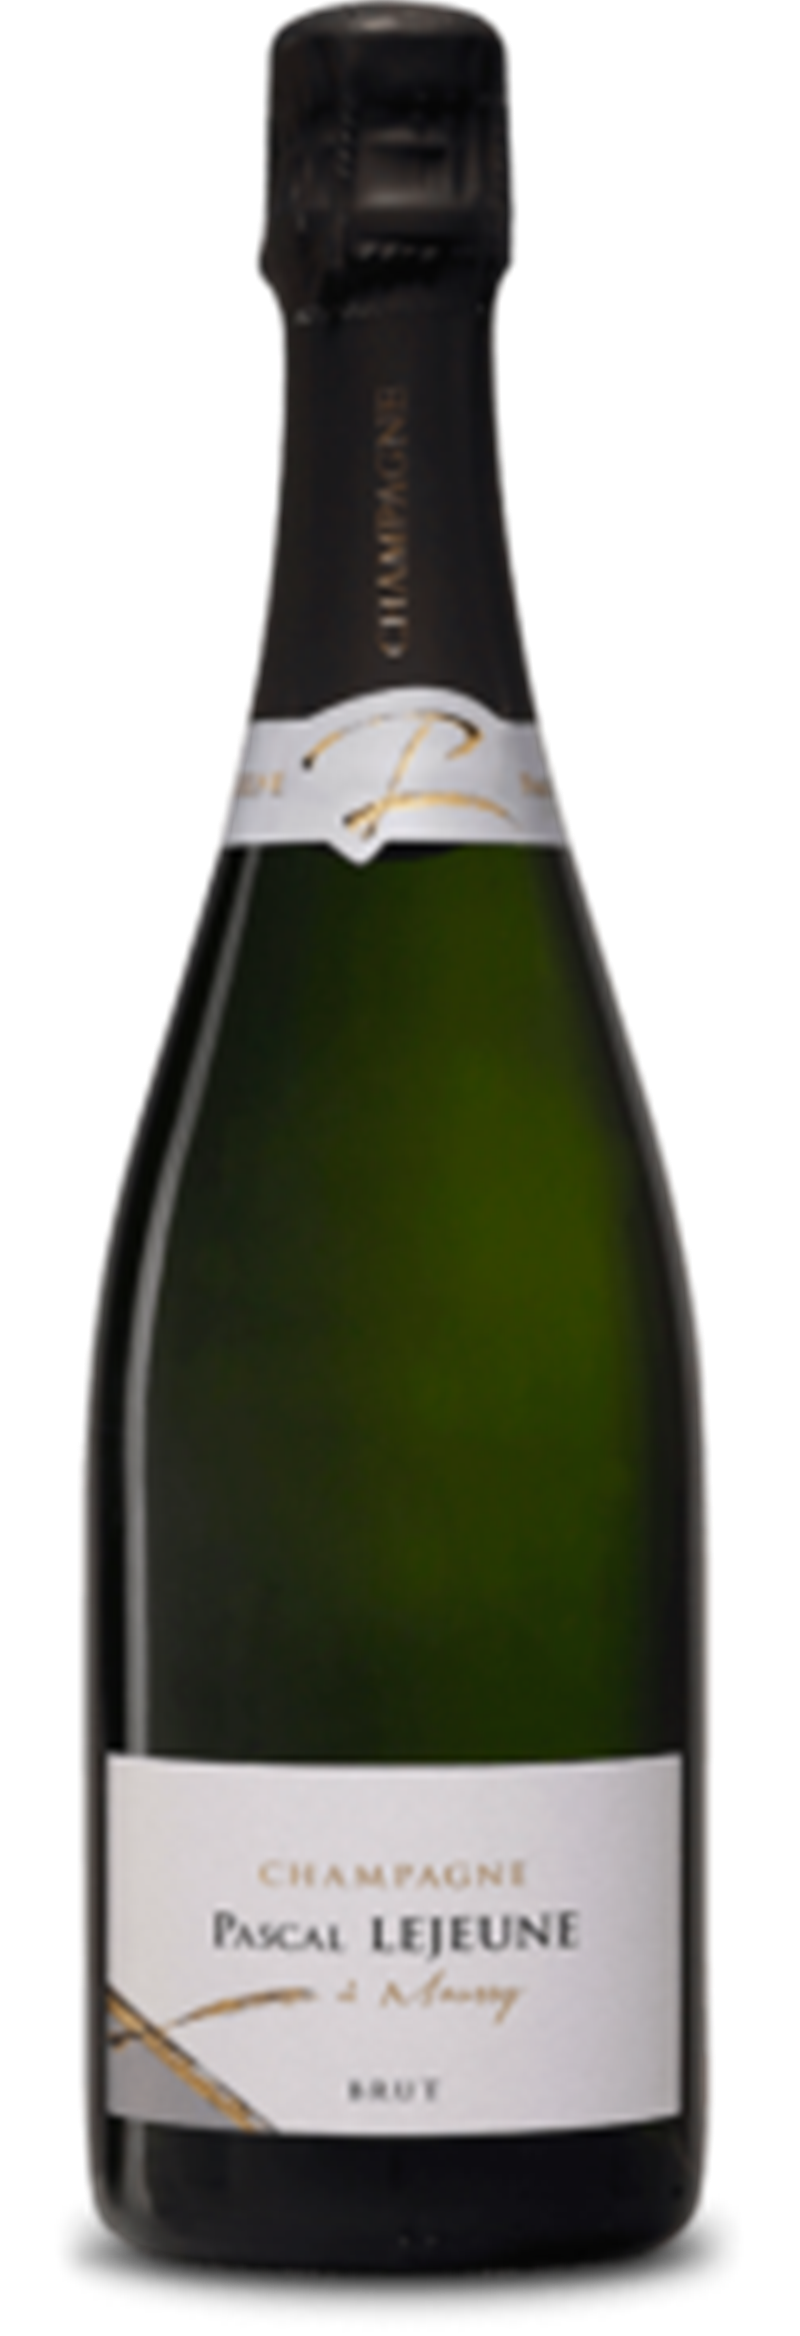 Champagne Pascal Lejeune, Brut